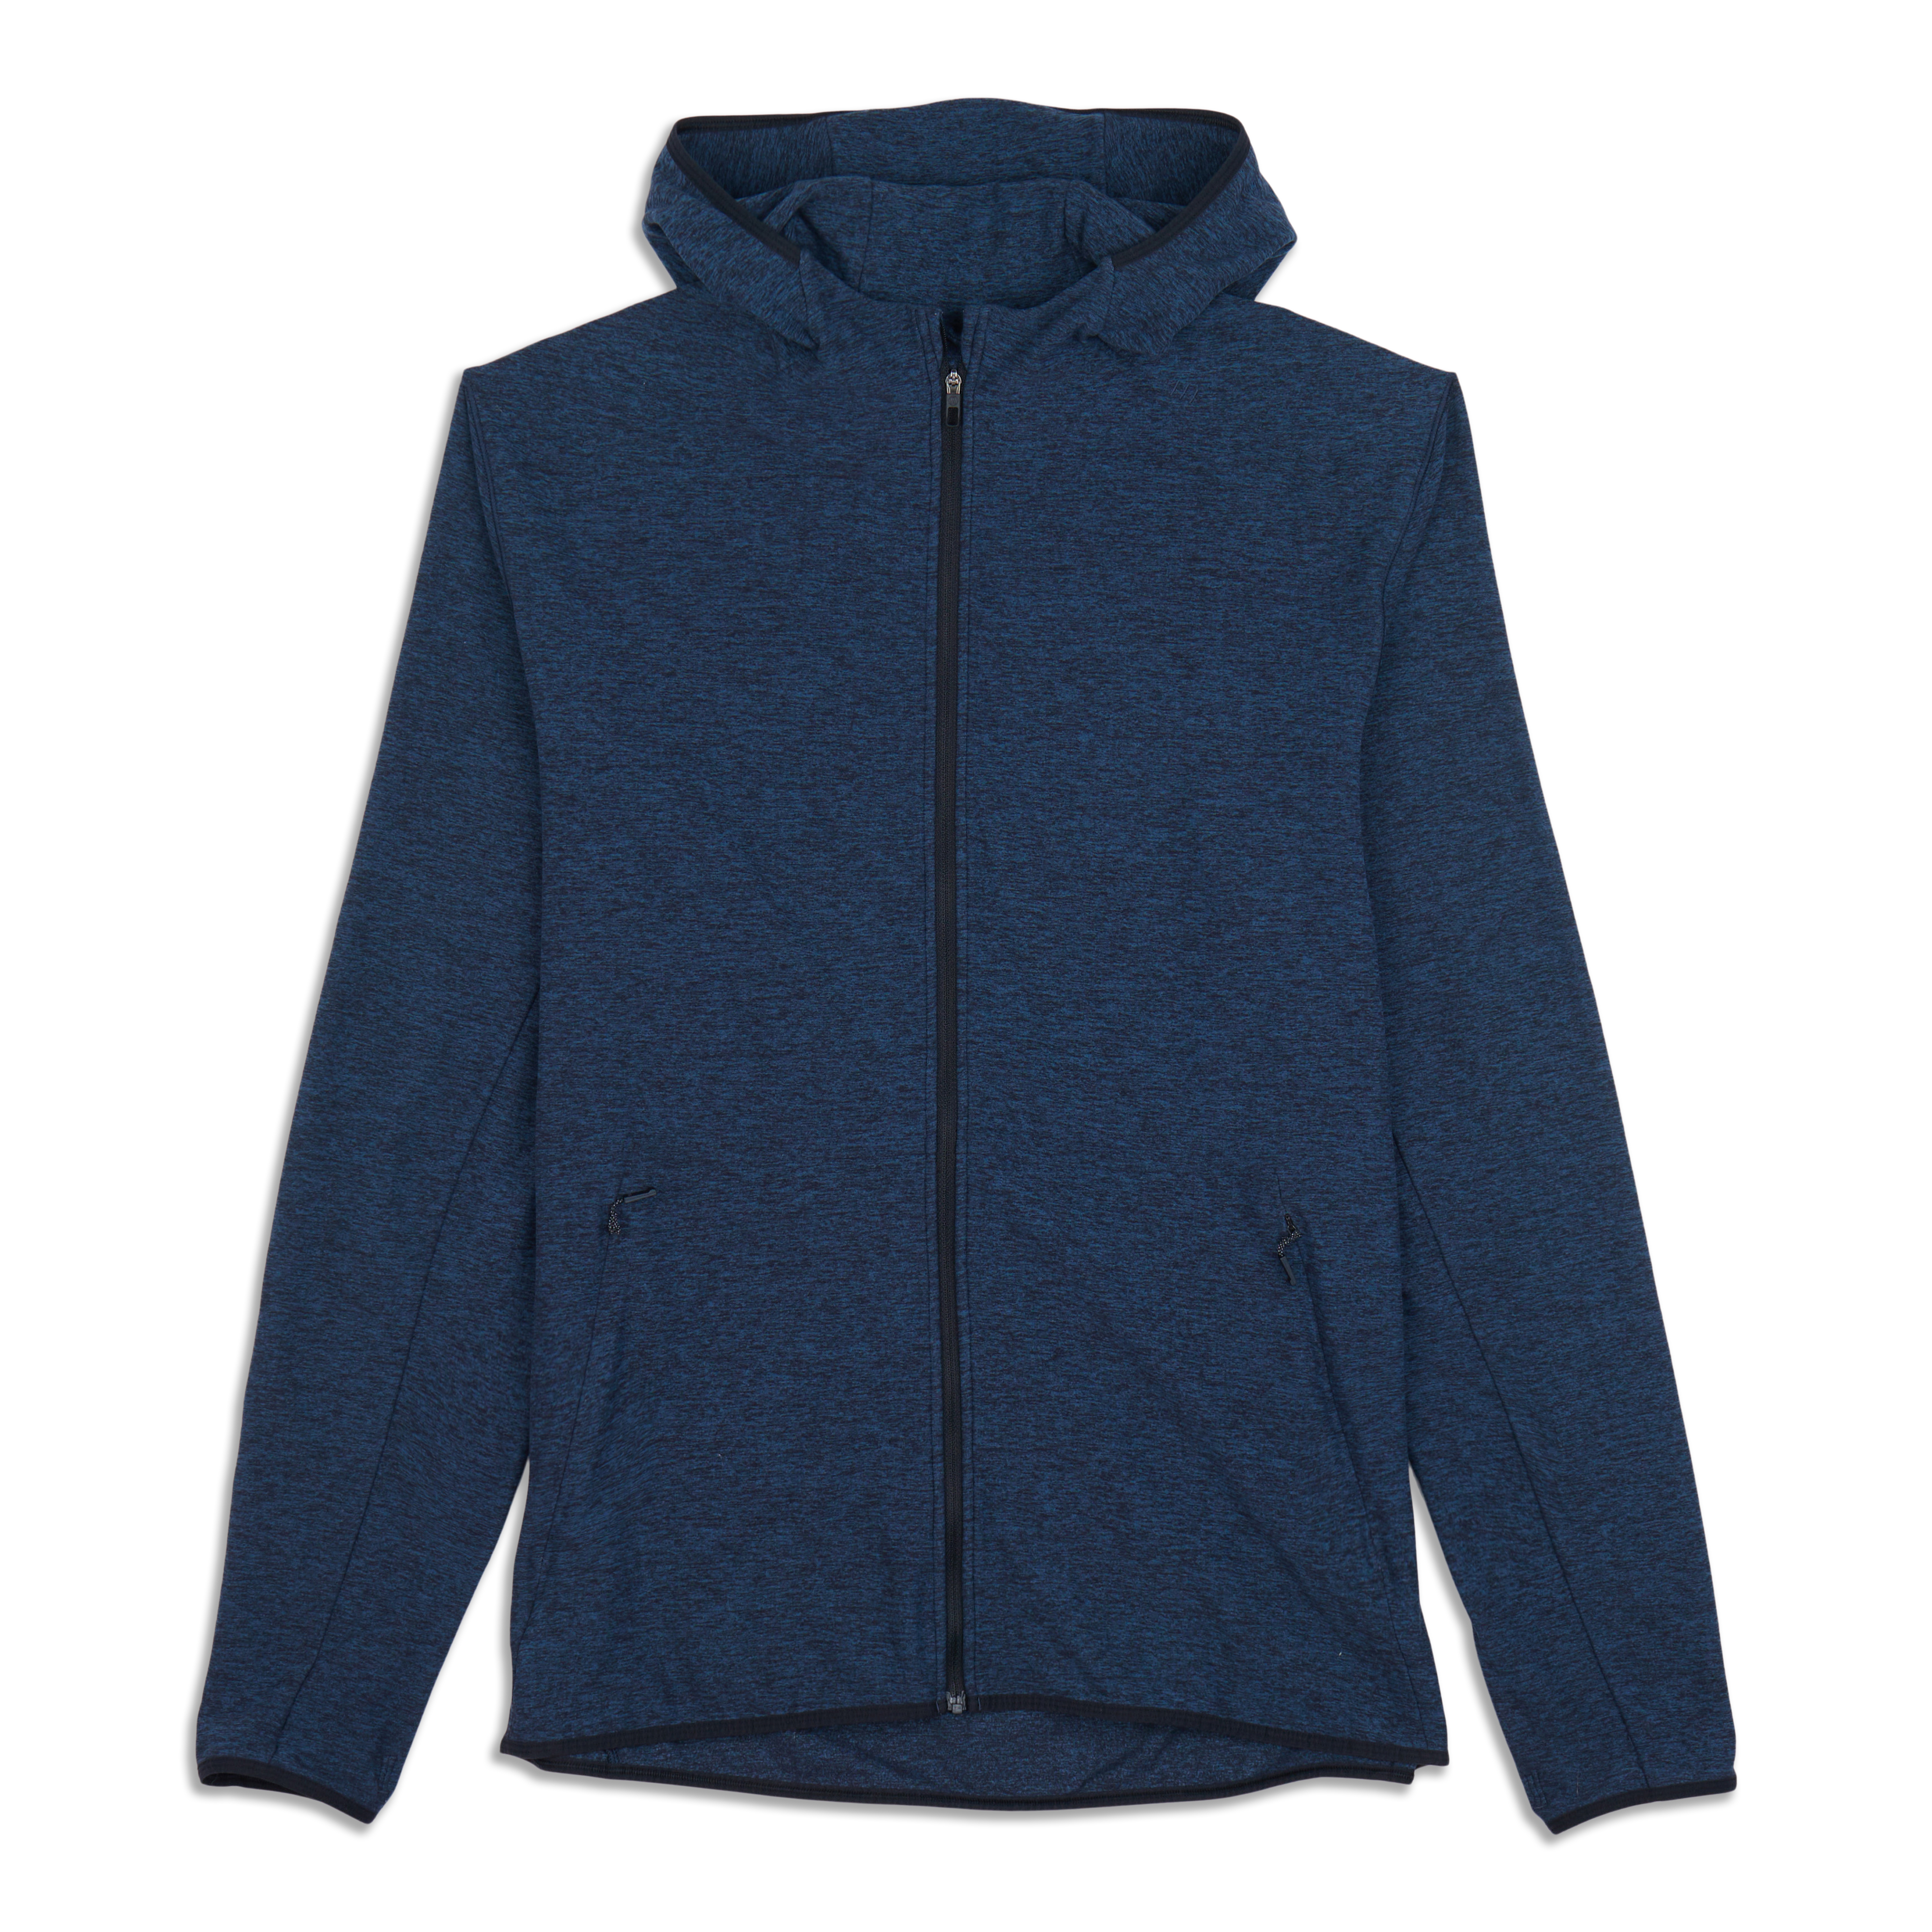 EUC🌟 Lululemon Surge Warm Full Zip Hoodie Jacket Size L Heathered